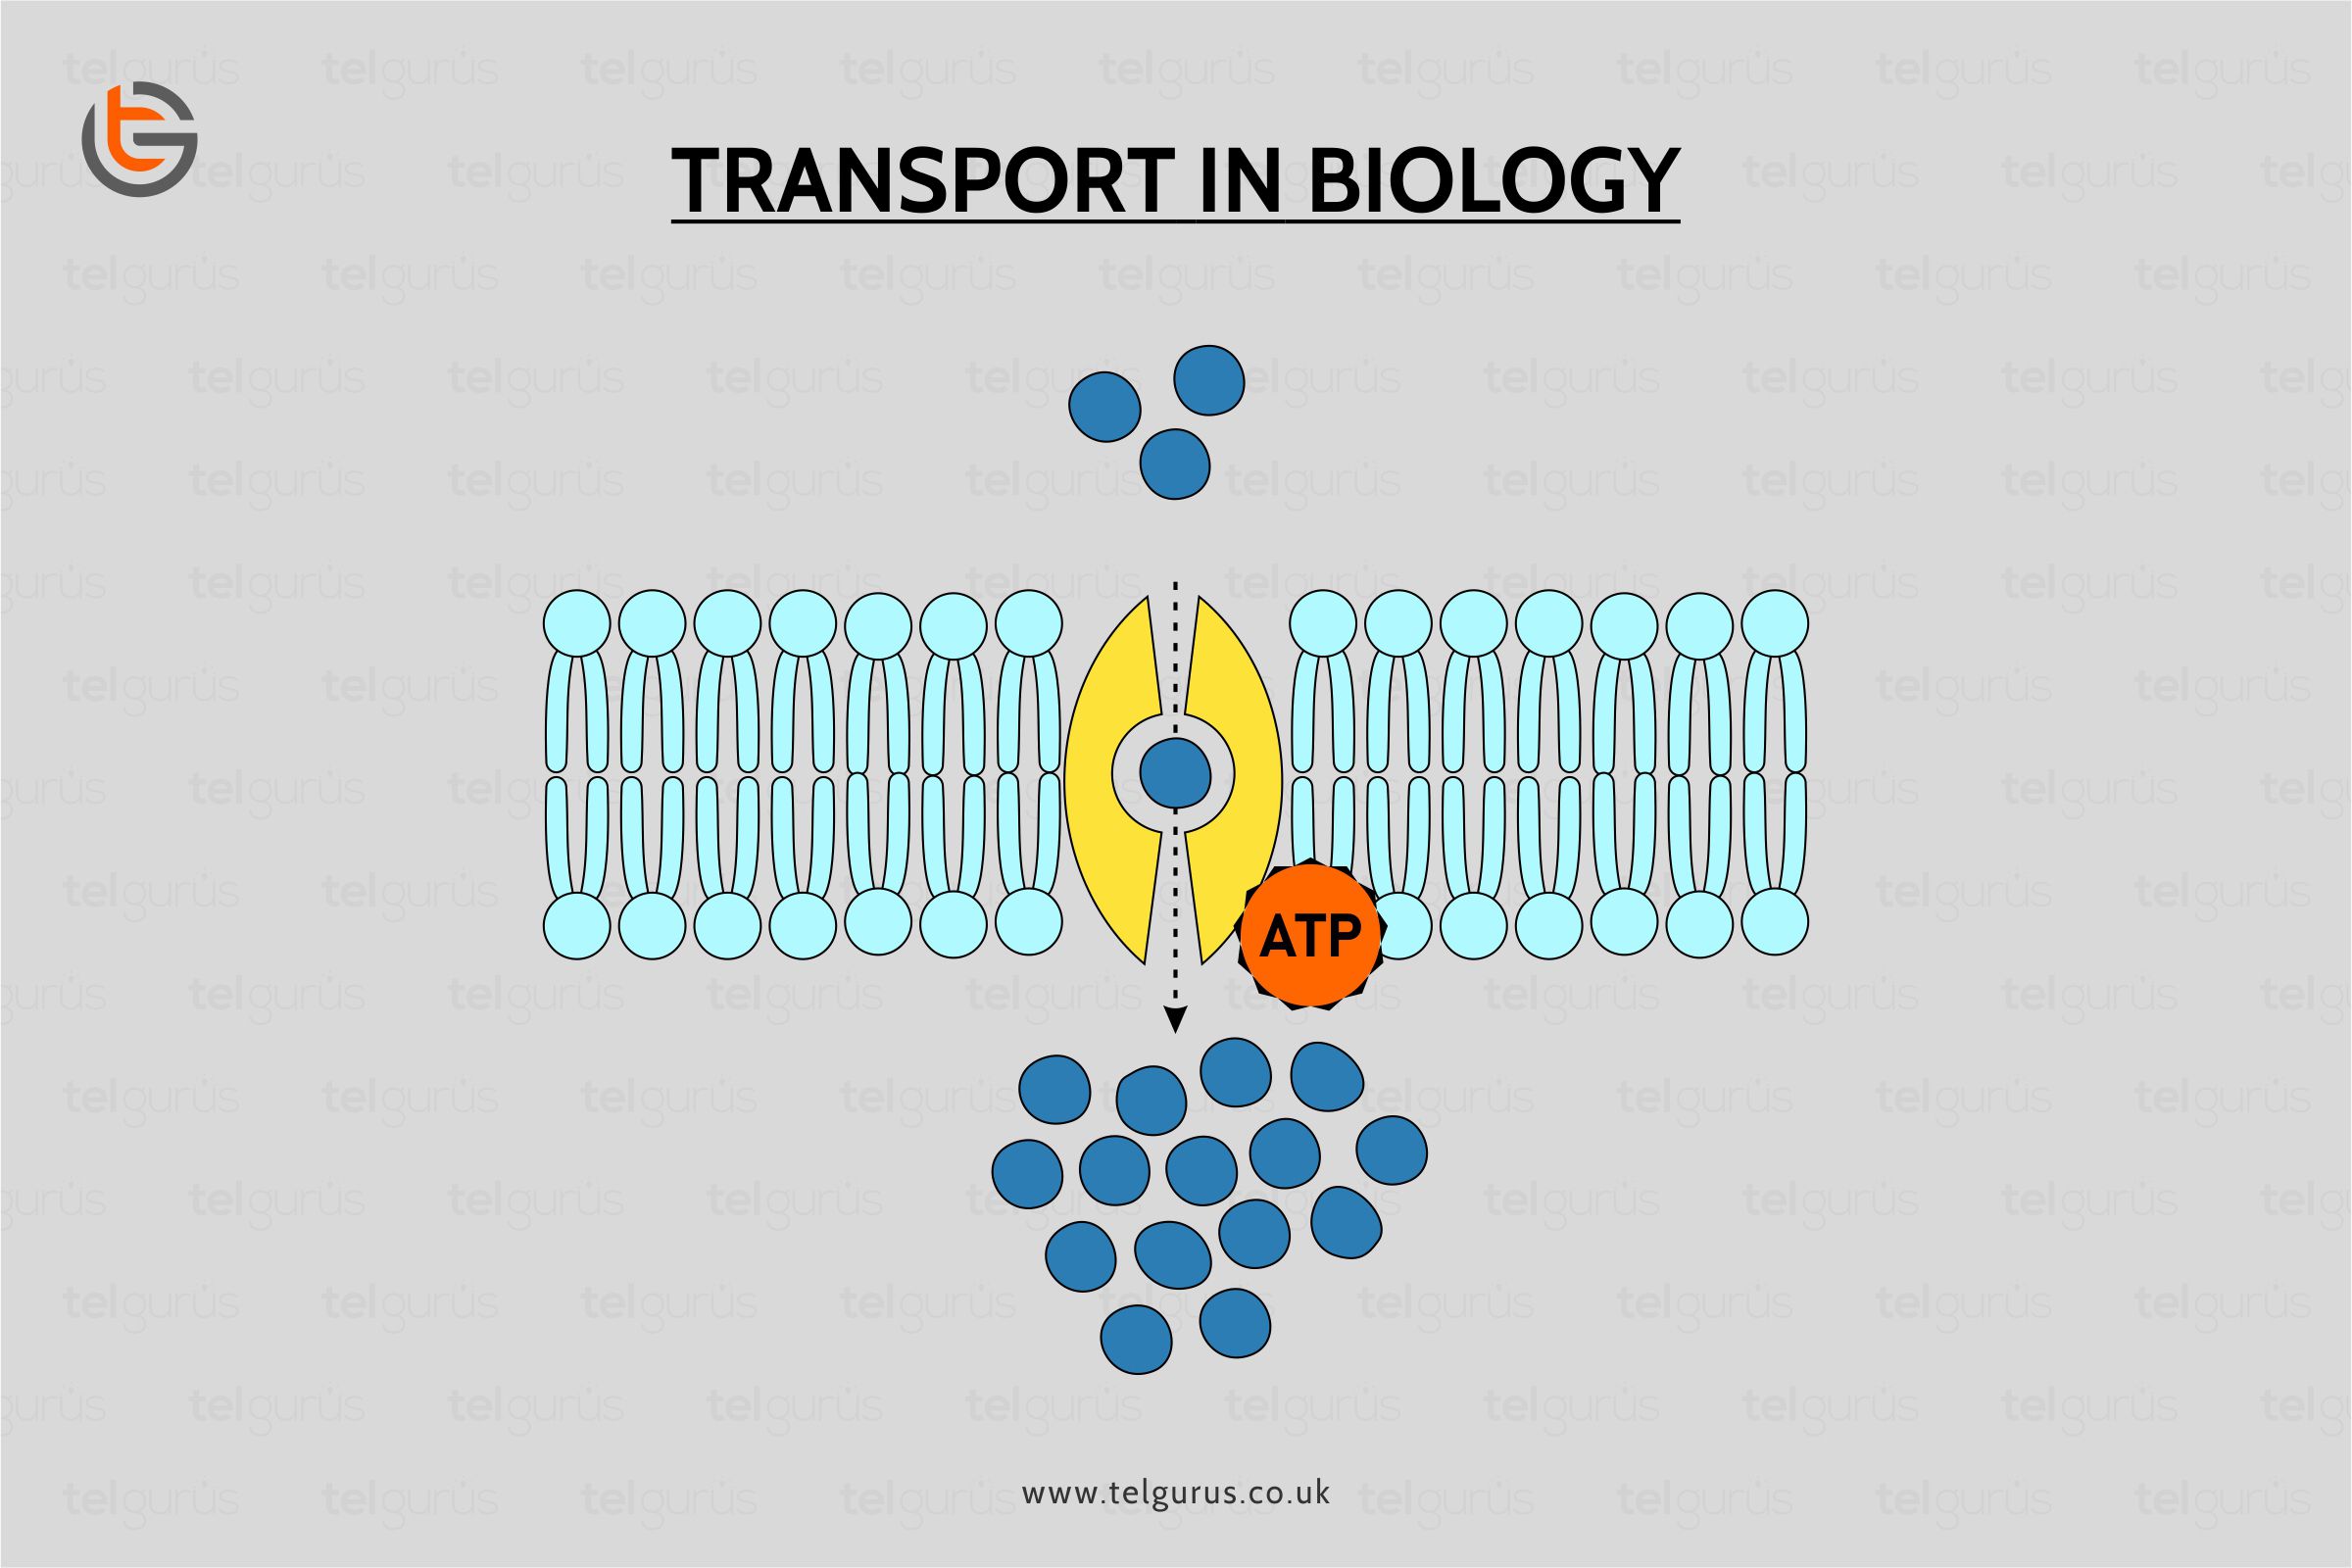 Transport in Biology